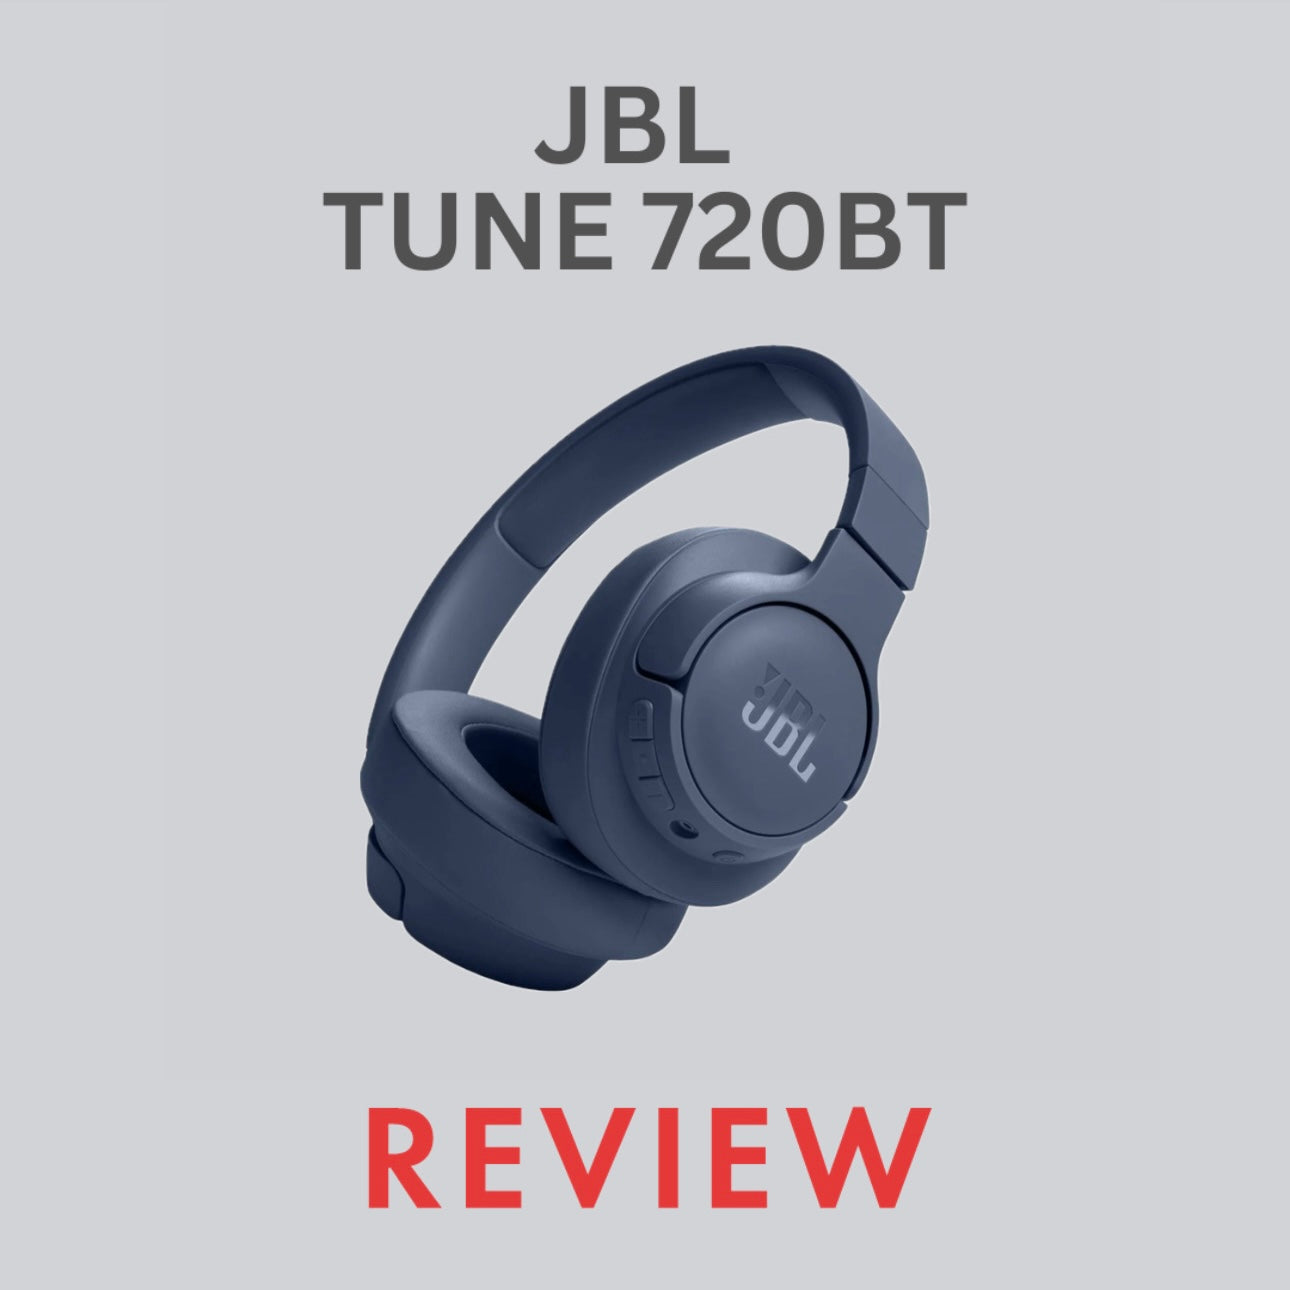 JBL Tune 720BT specifications